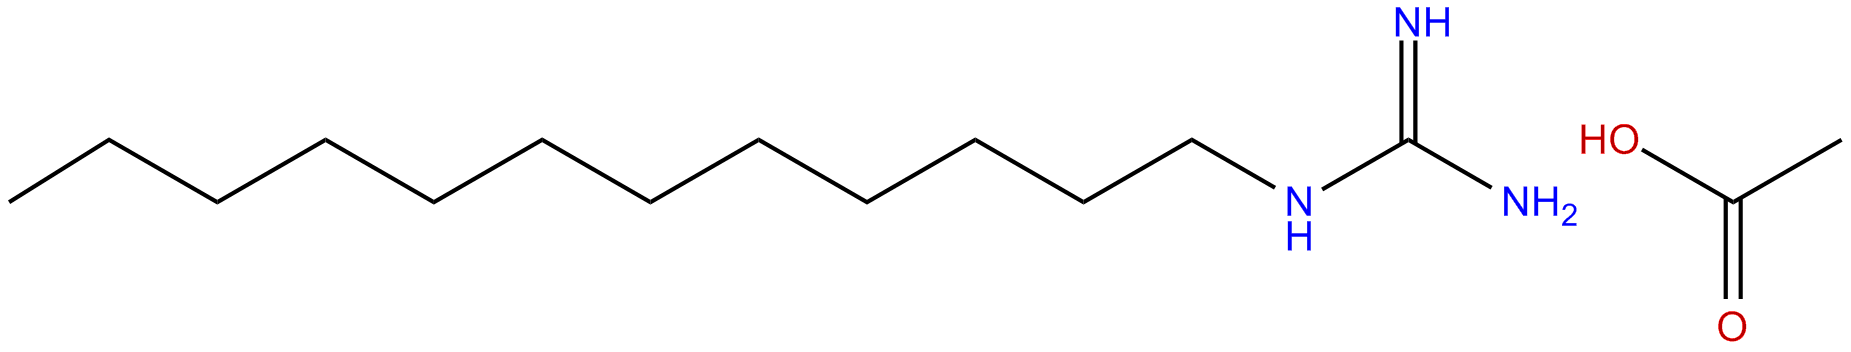 Image of 1-dodecylguanidinium ethanoate